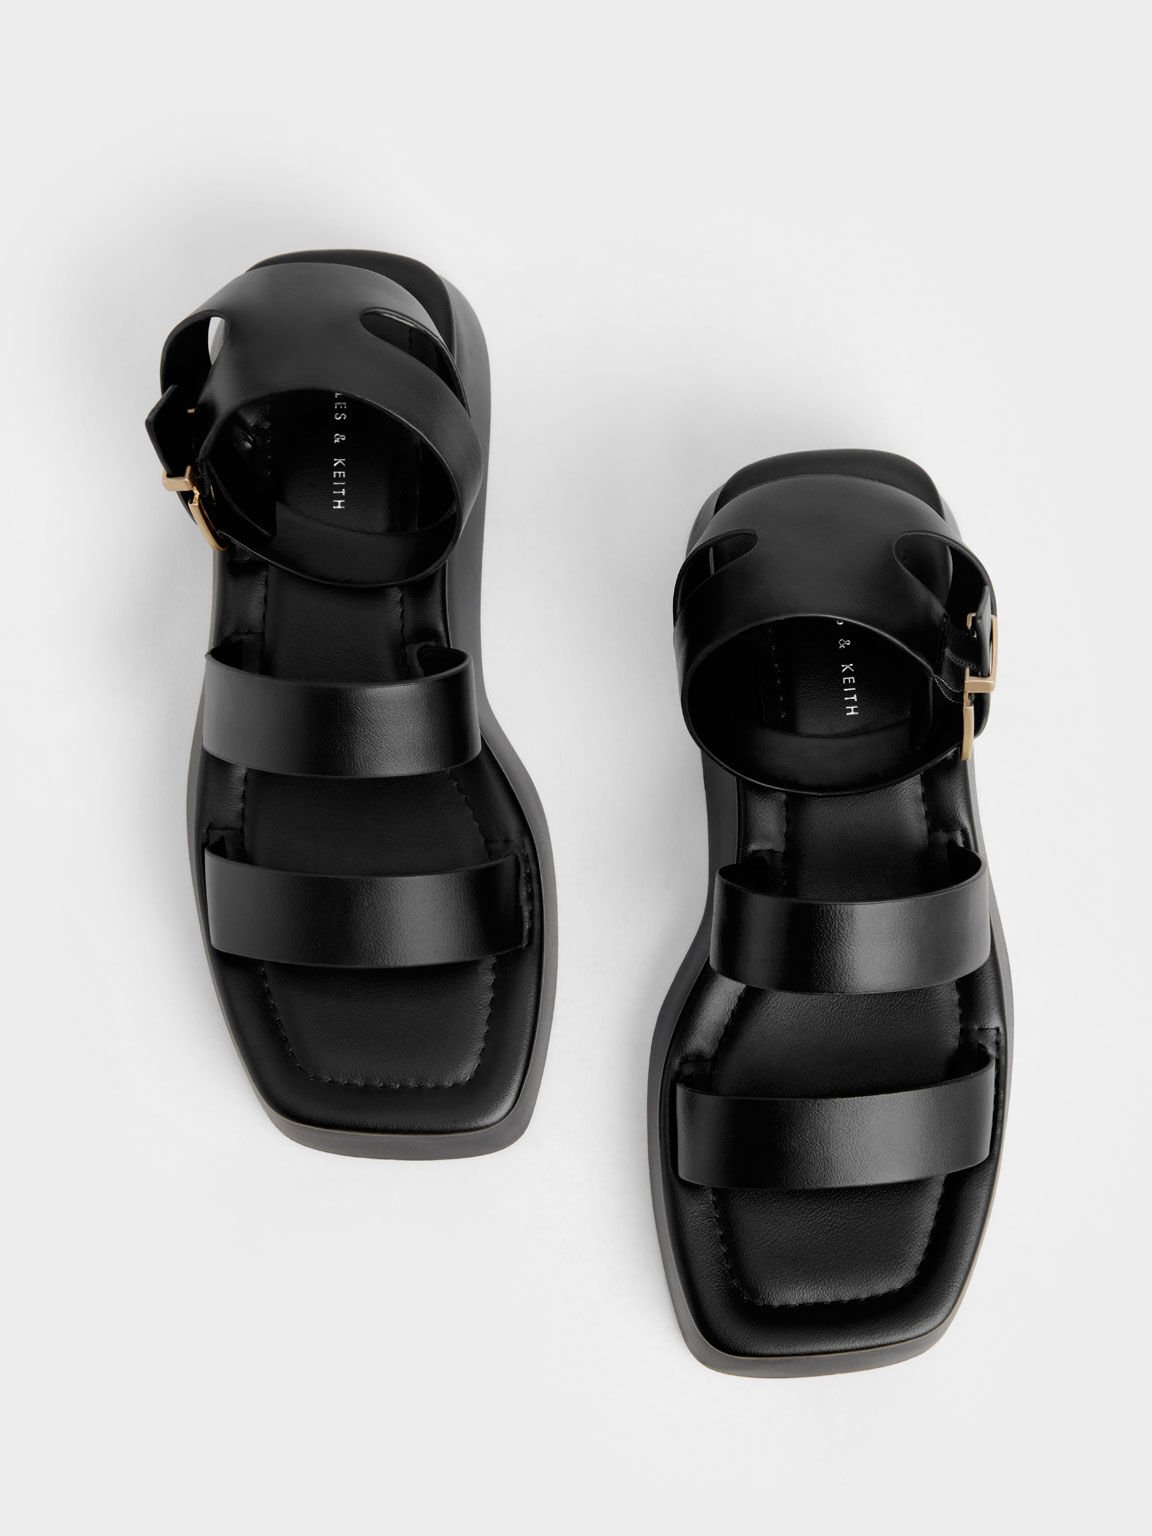 Square Toe Ankle-Strap Sandals, Black, hi-res